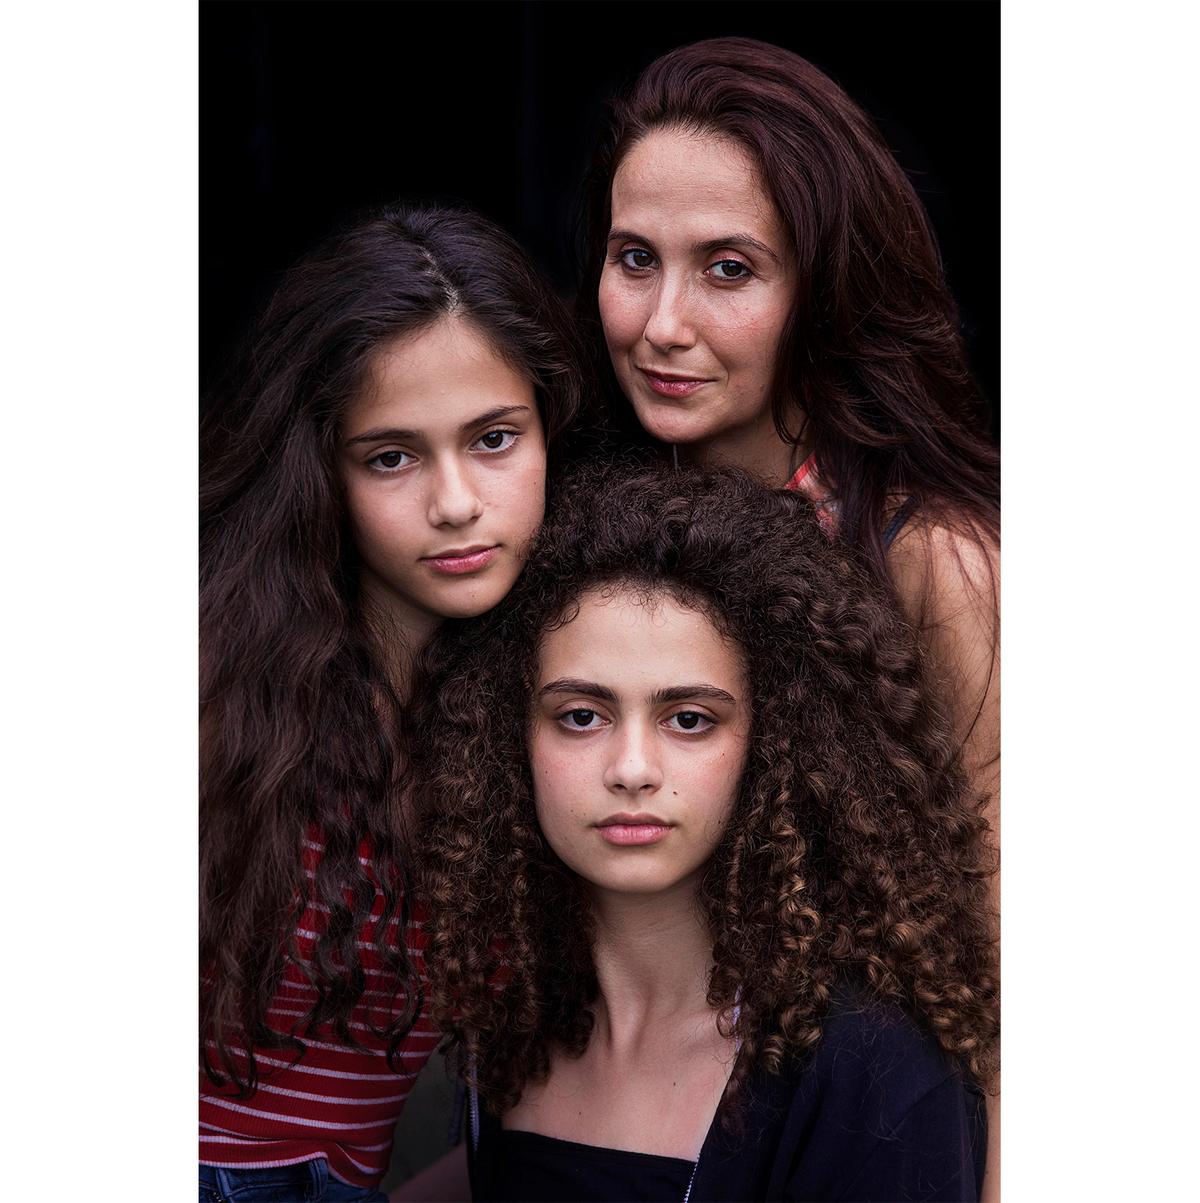 BUCHAREST, ROMANIA, "Carmen and her daughters, Ranya and Zara" (Courtesy of <a href="https://theatlasofbeauty.com/">Mihaela Noroc</a>)